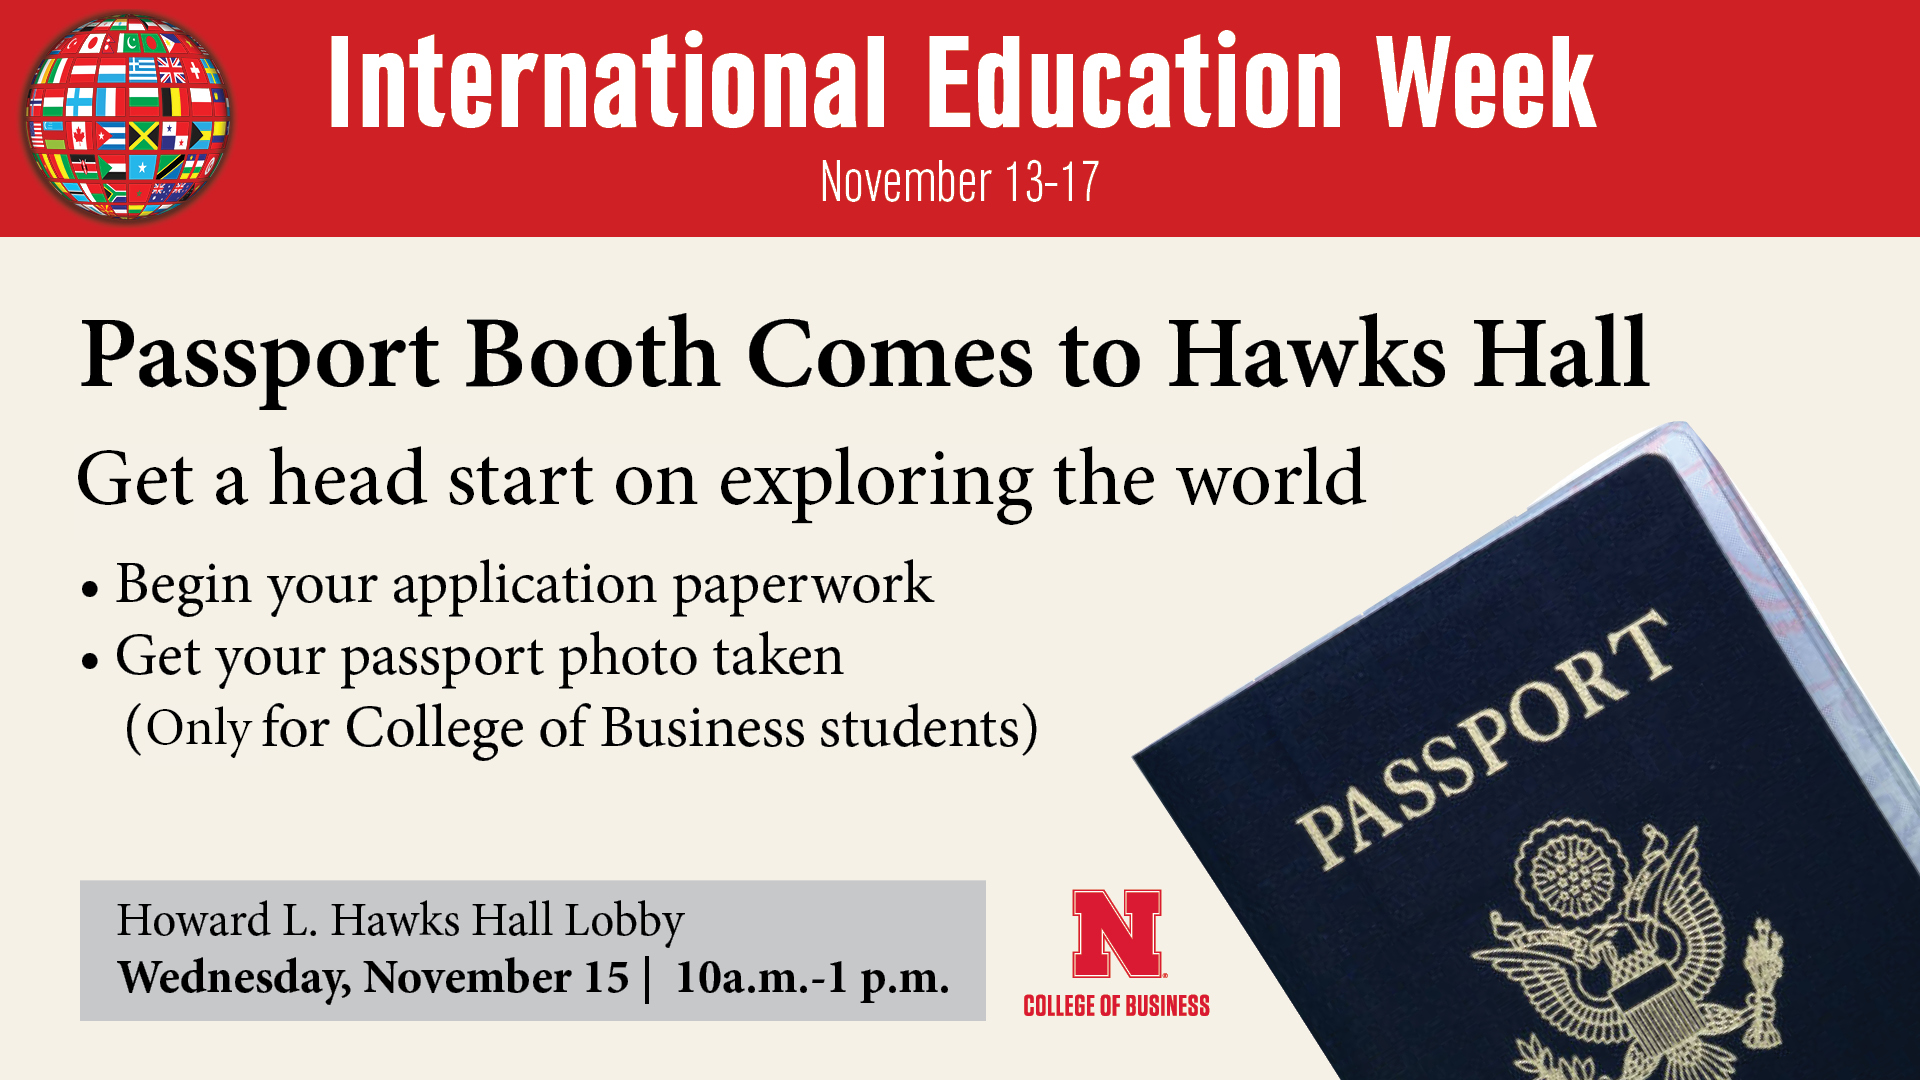 Start your passport application in Hawks Hall